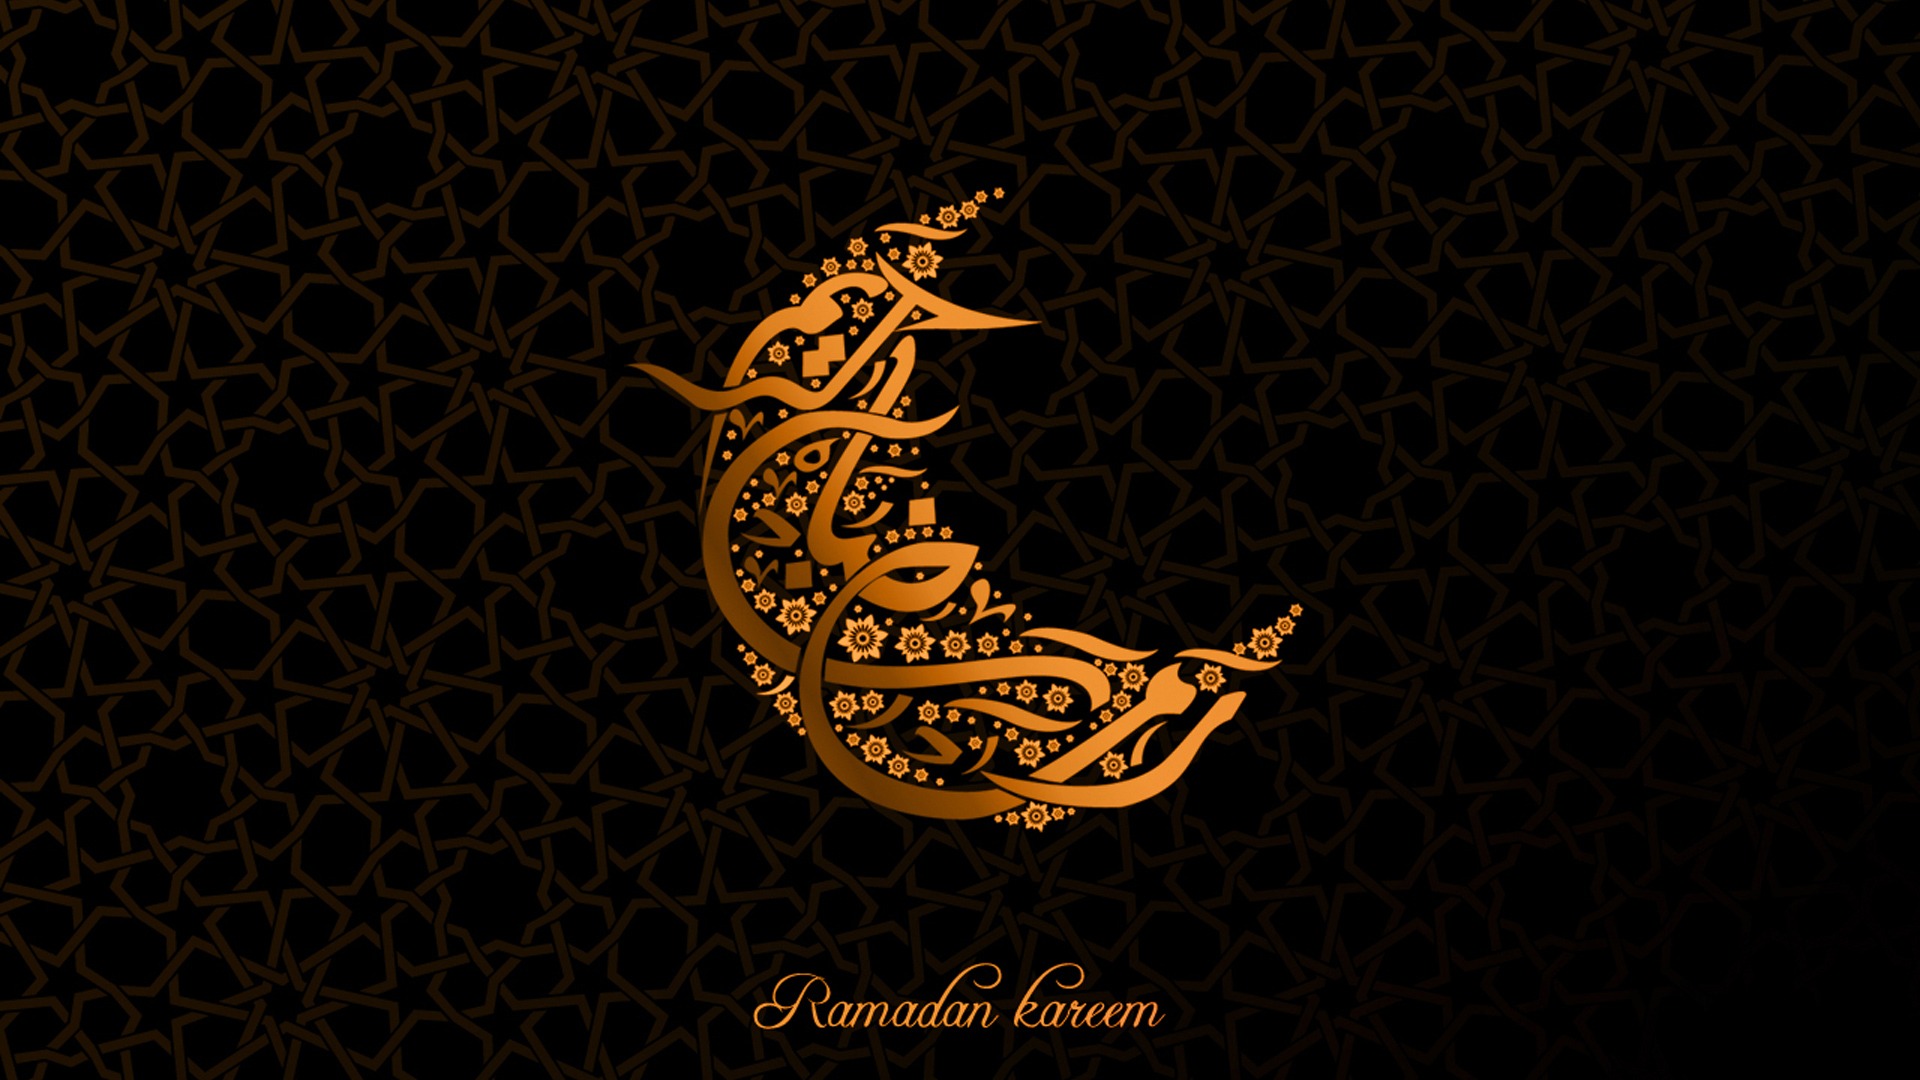 Awesome Islam Images 4k Ultra Hd For Mobile - Ramadan Kareem - HD Wallpaper 